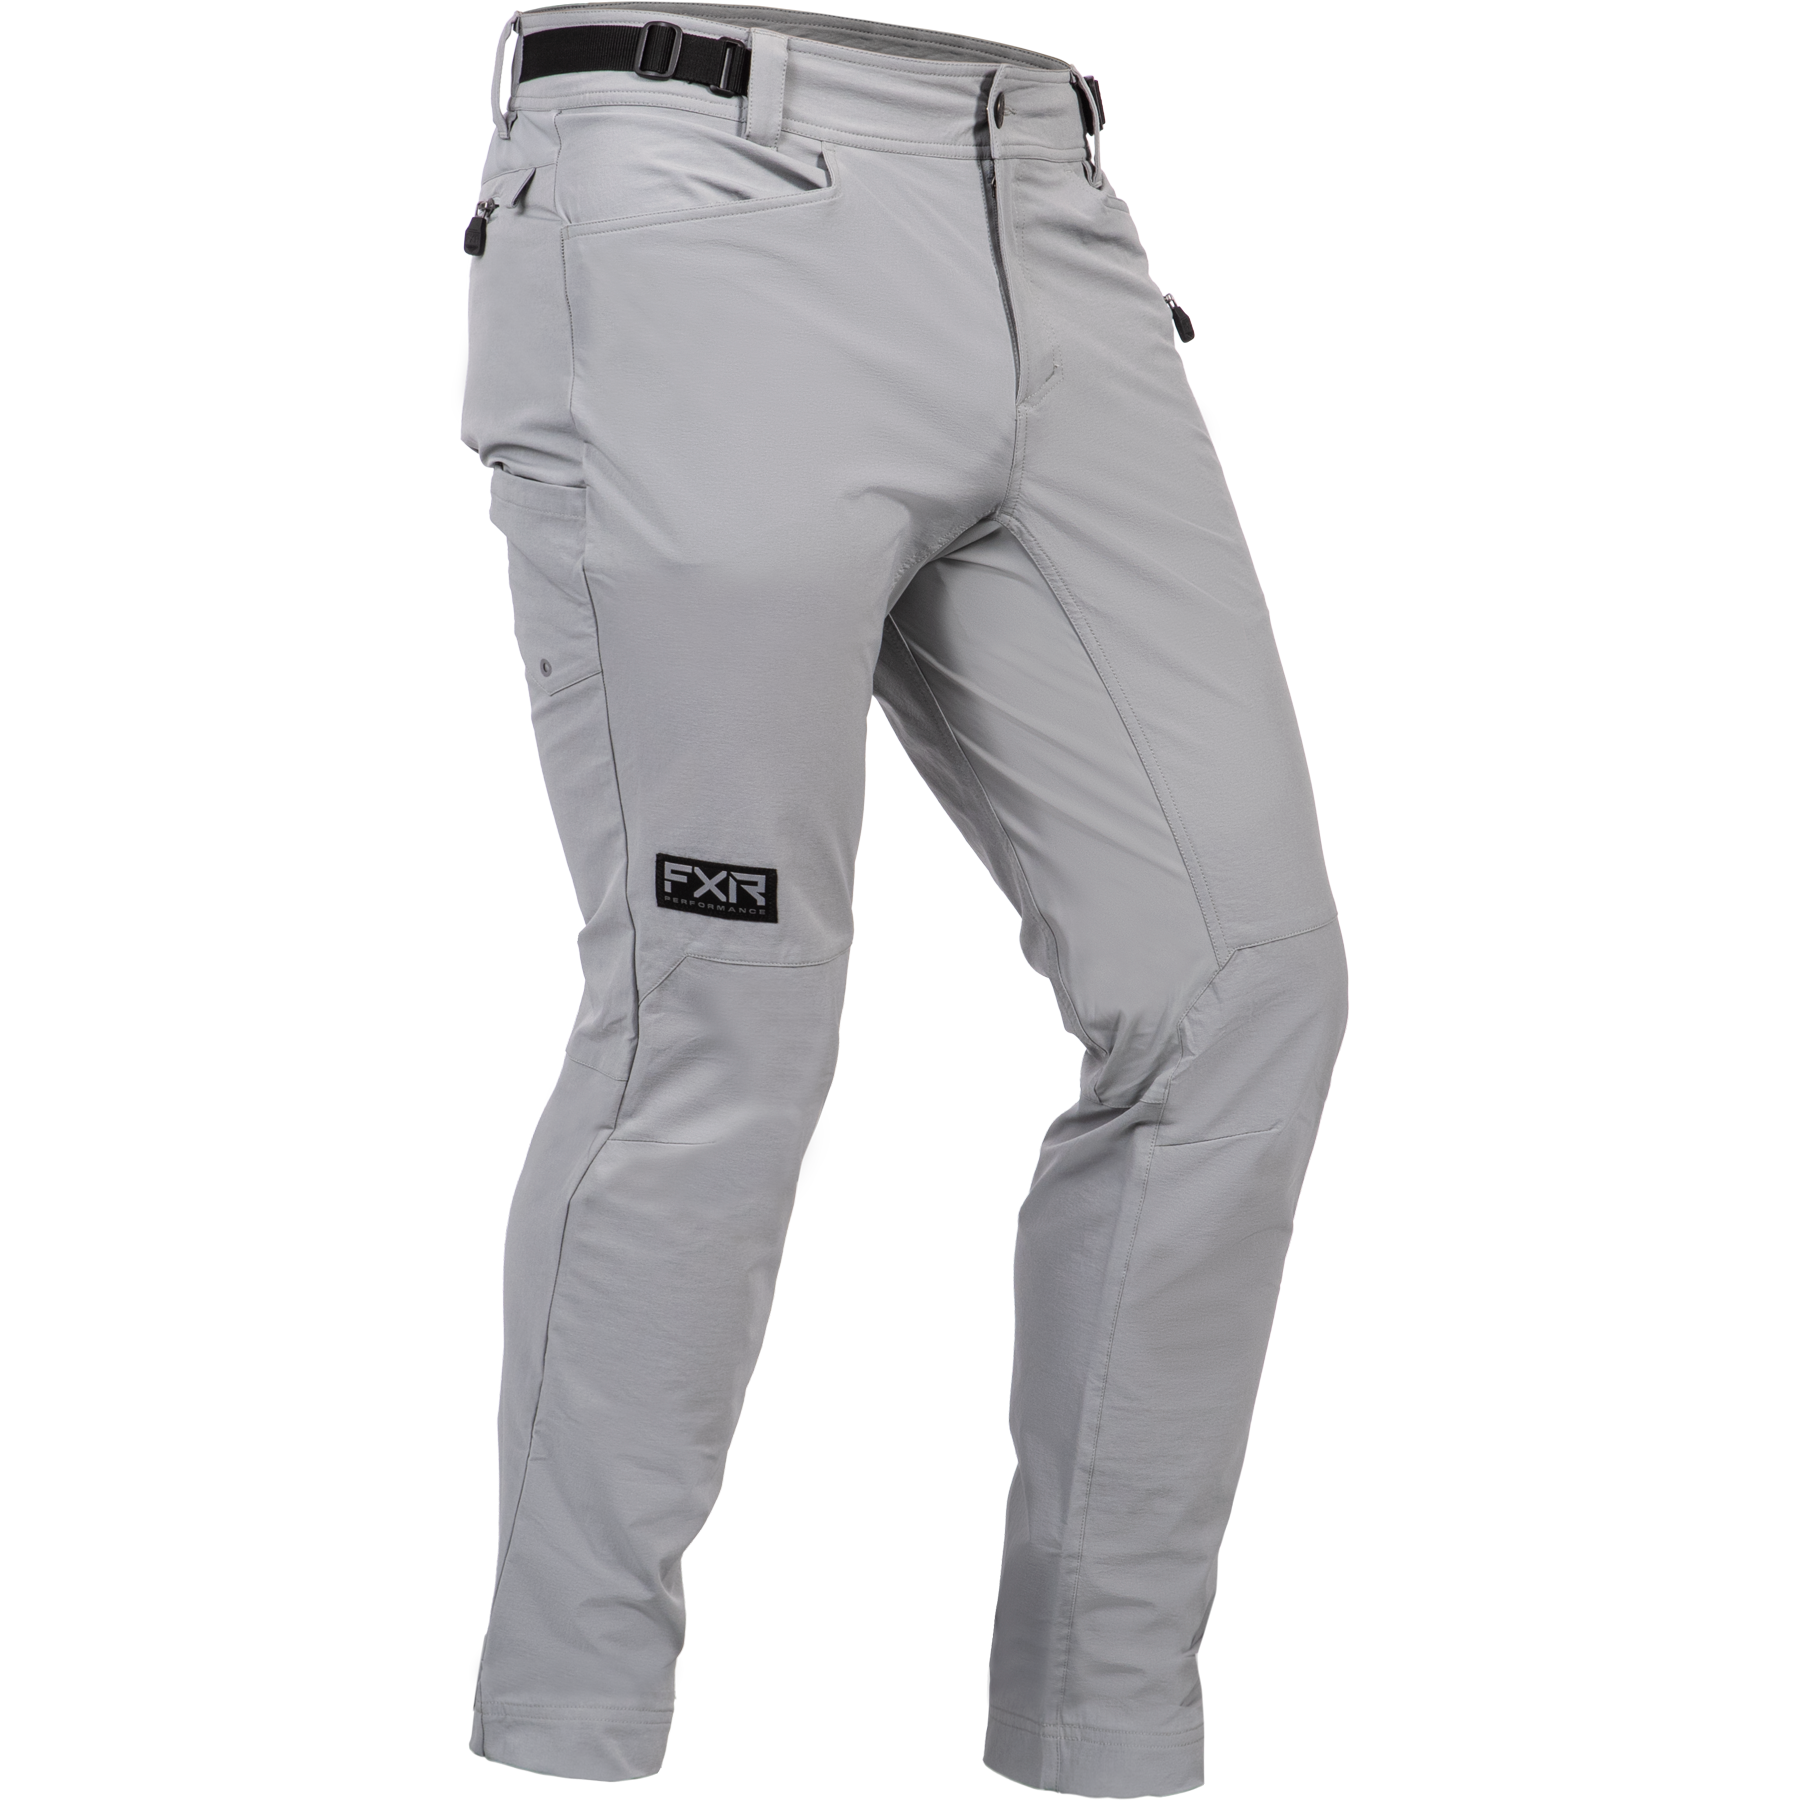 fxr racing pants  tech air pants - casual